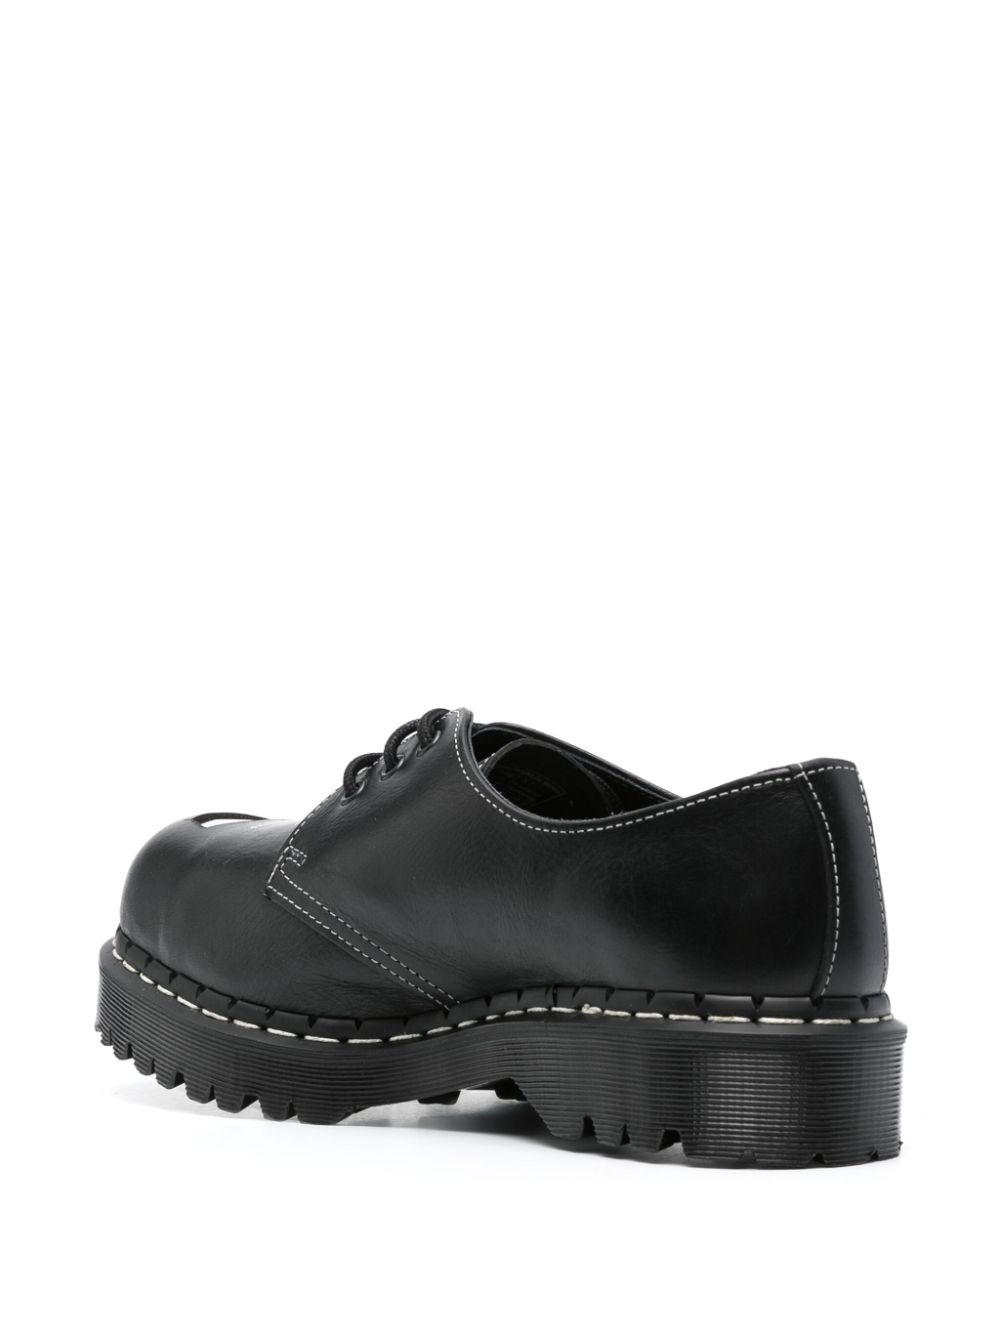 Dr. Martens leather derby shoes Black